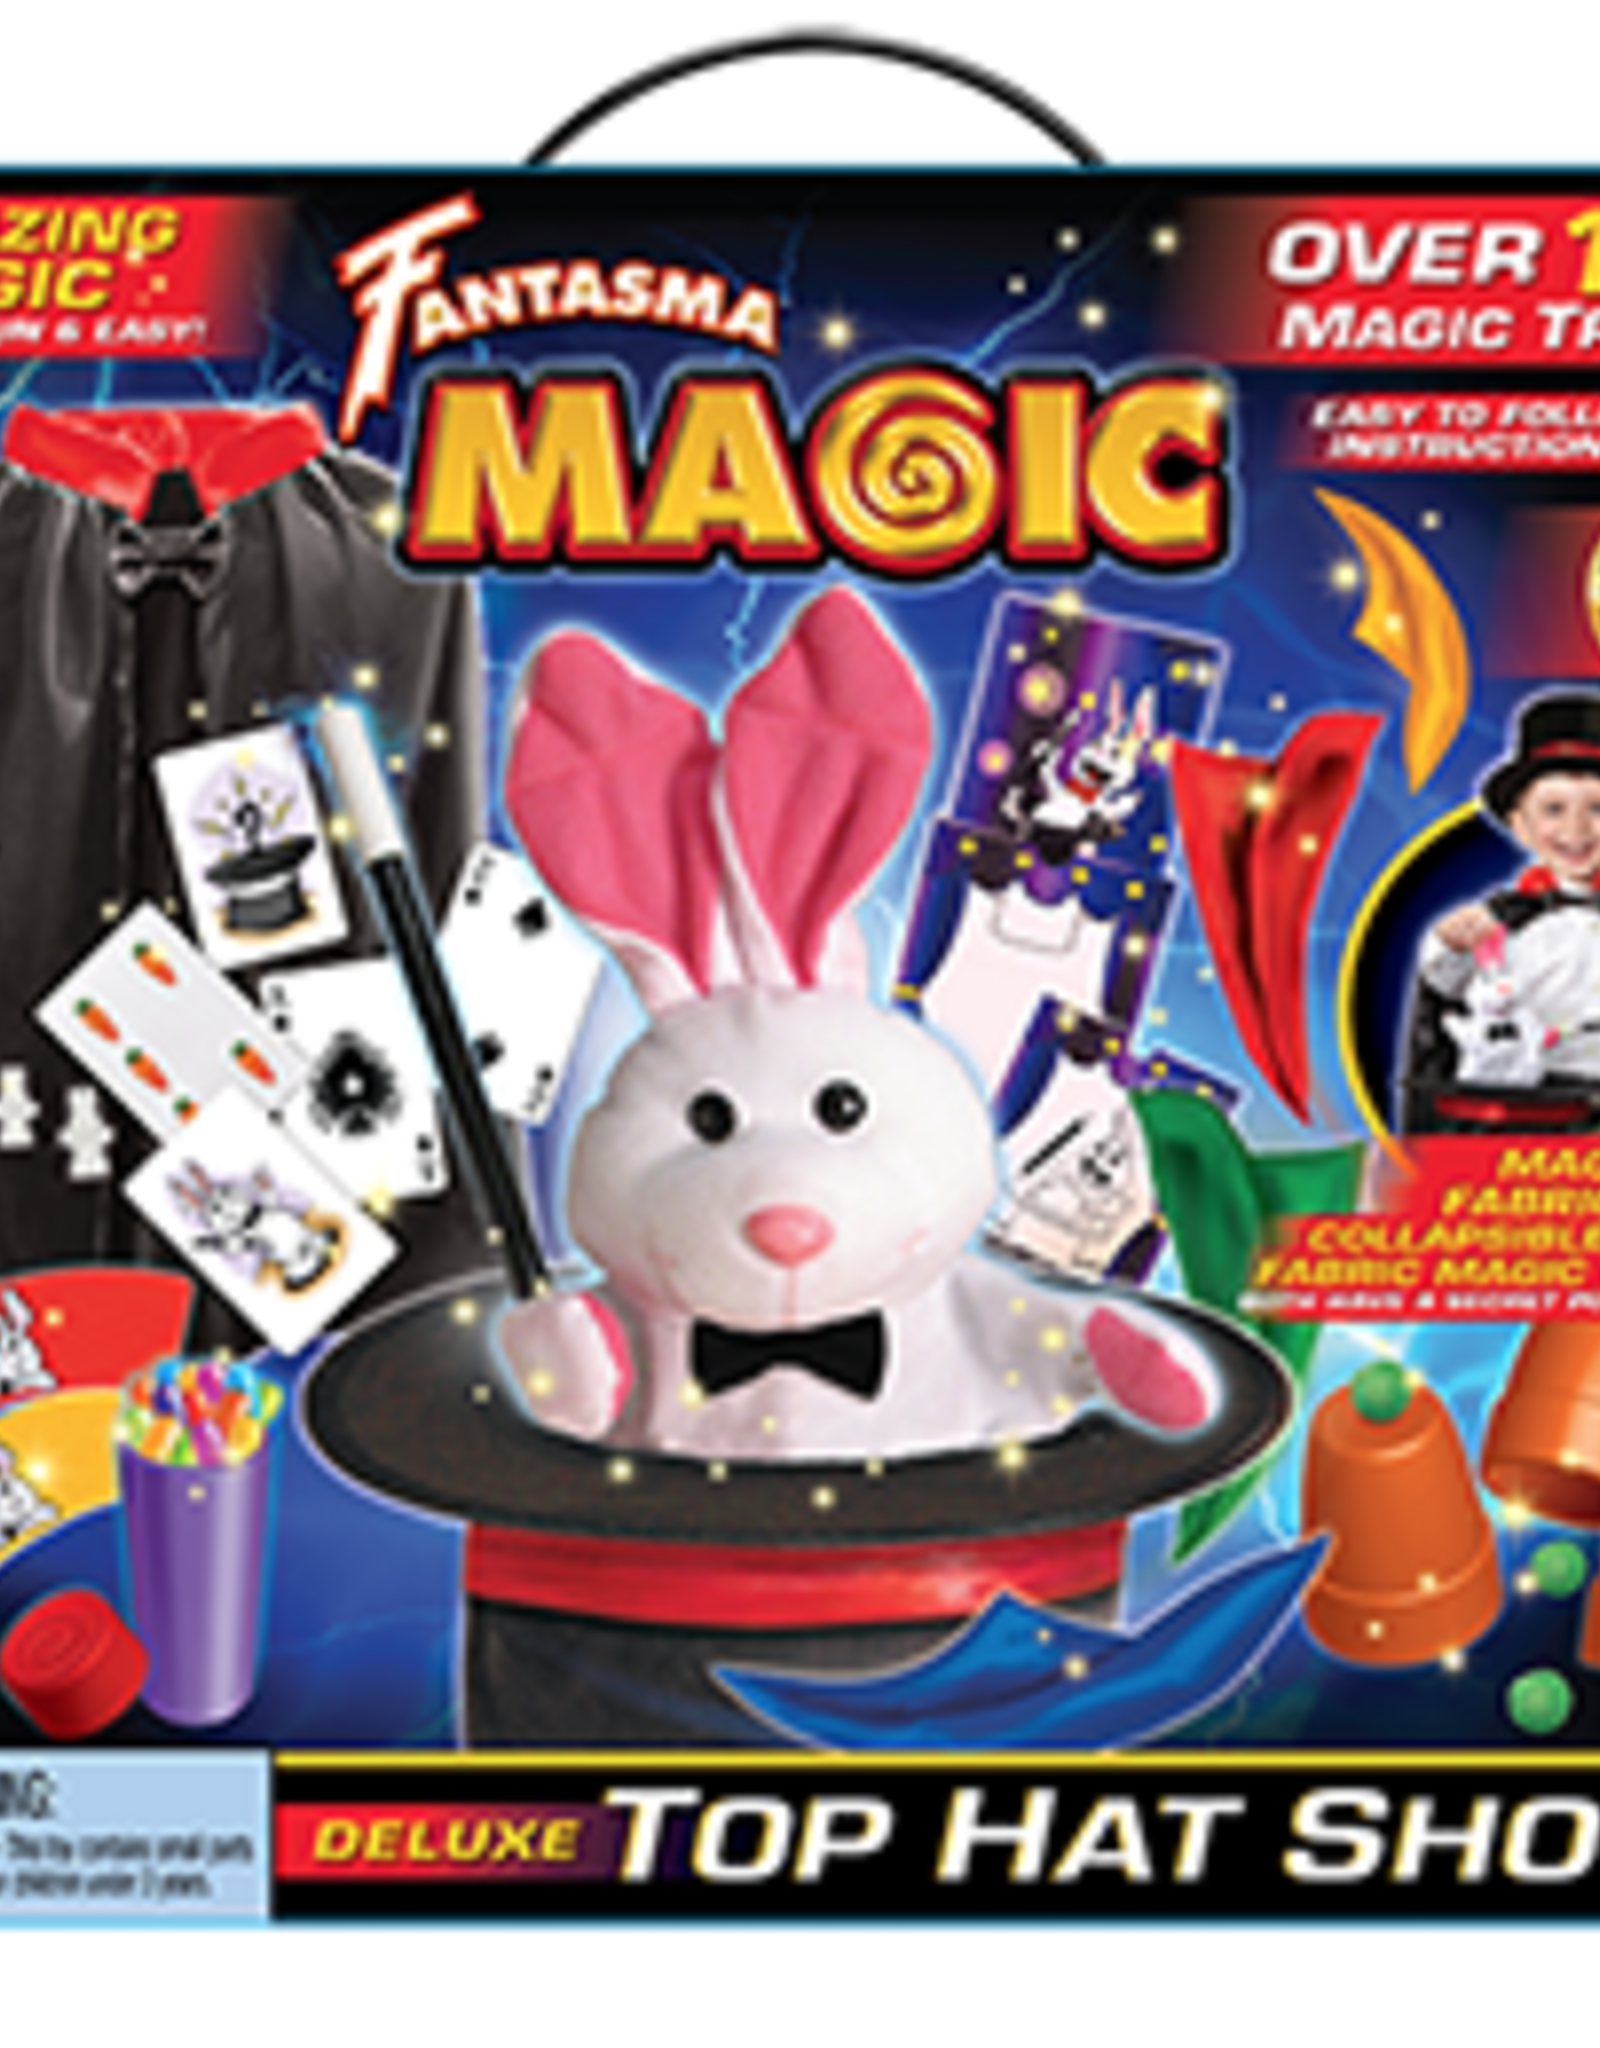 Fantasma Toys Deluxe Top Hat Show Magic Set